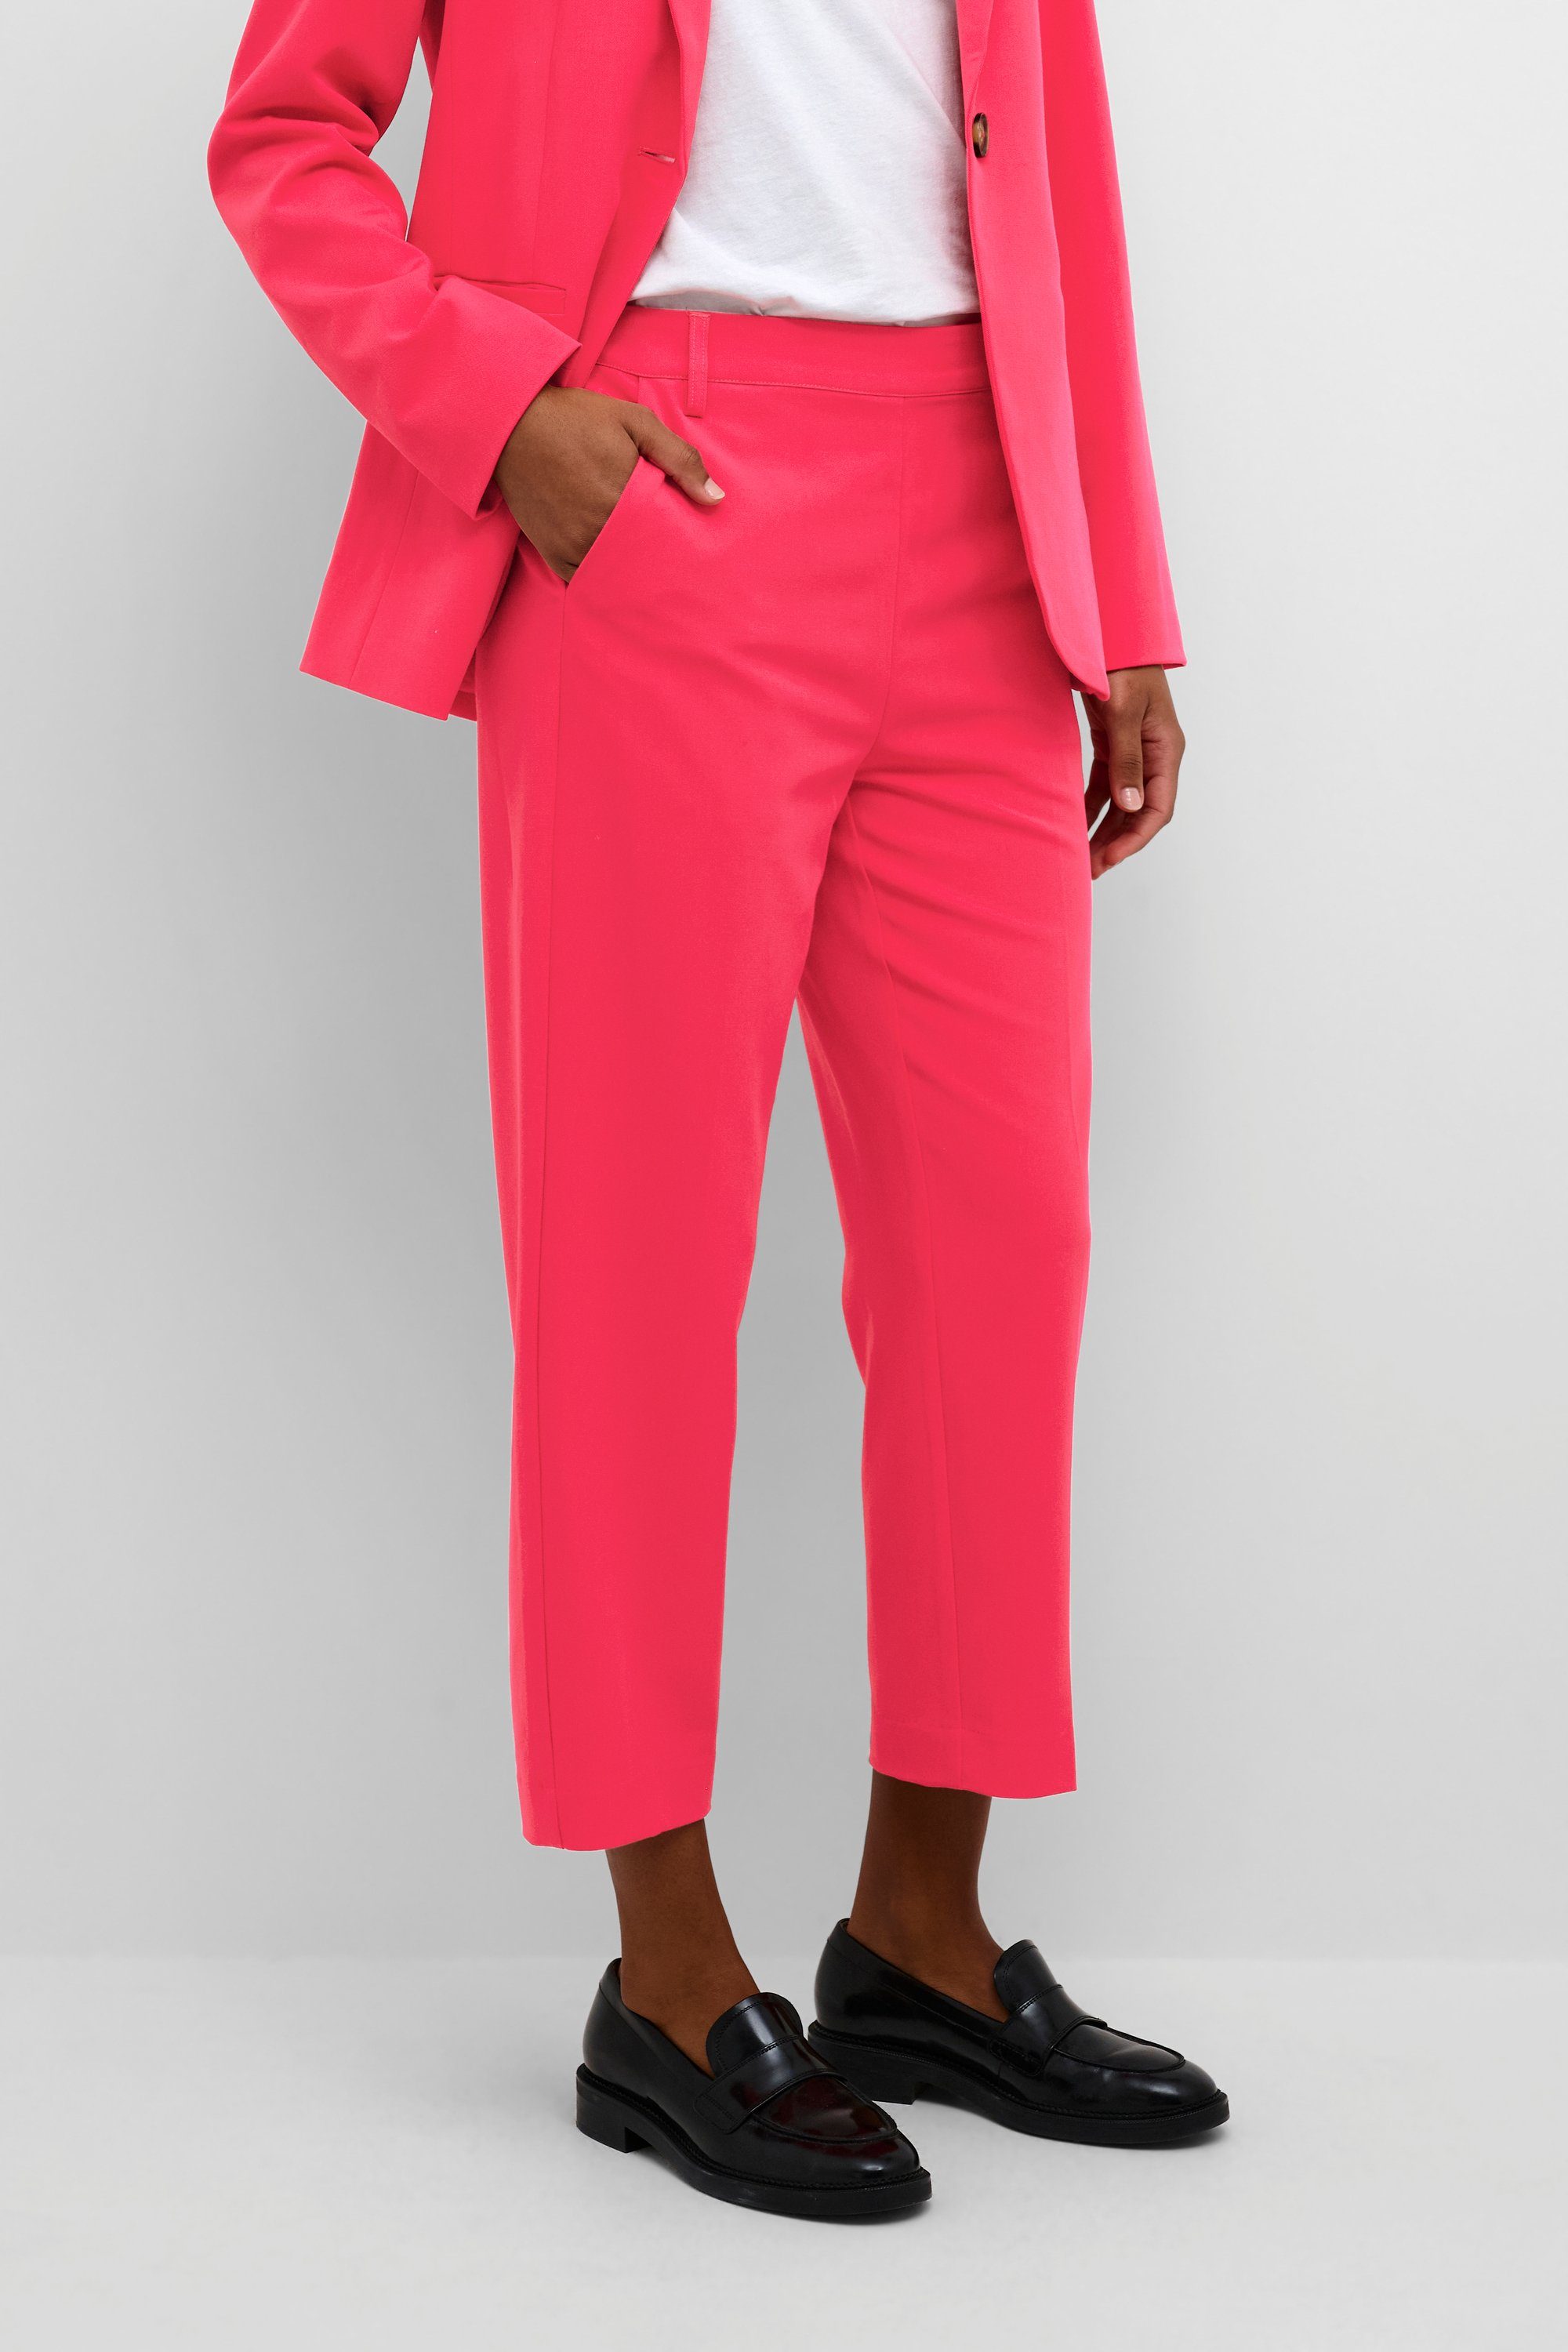 KAsakura KAFFE Pink Virtual Suiting Pants Anzughose